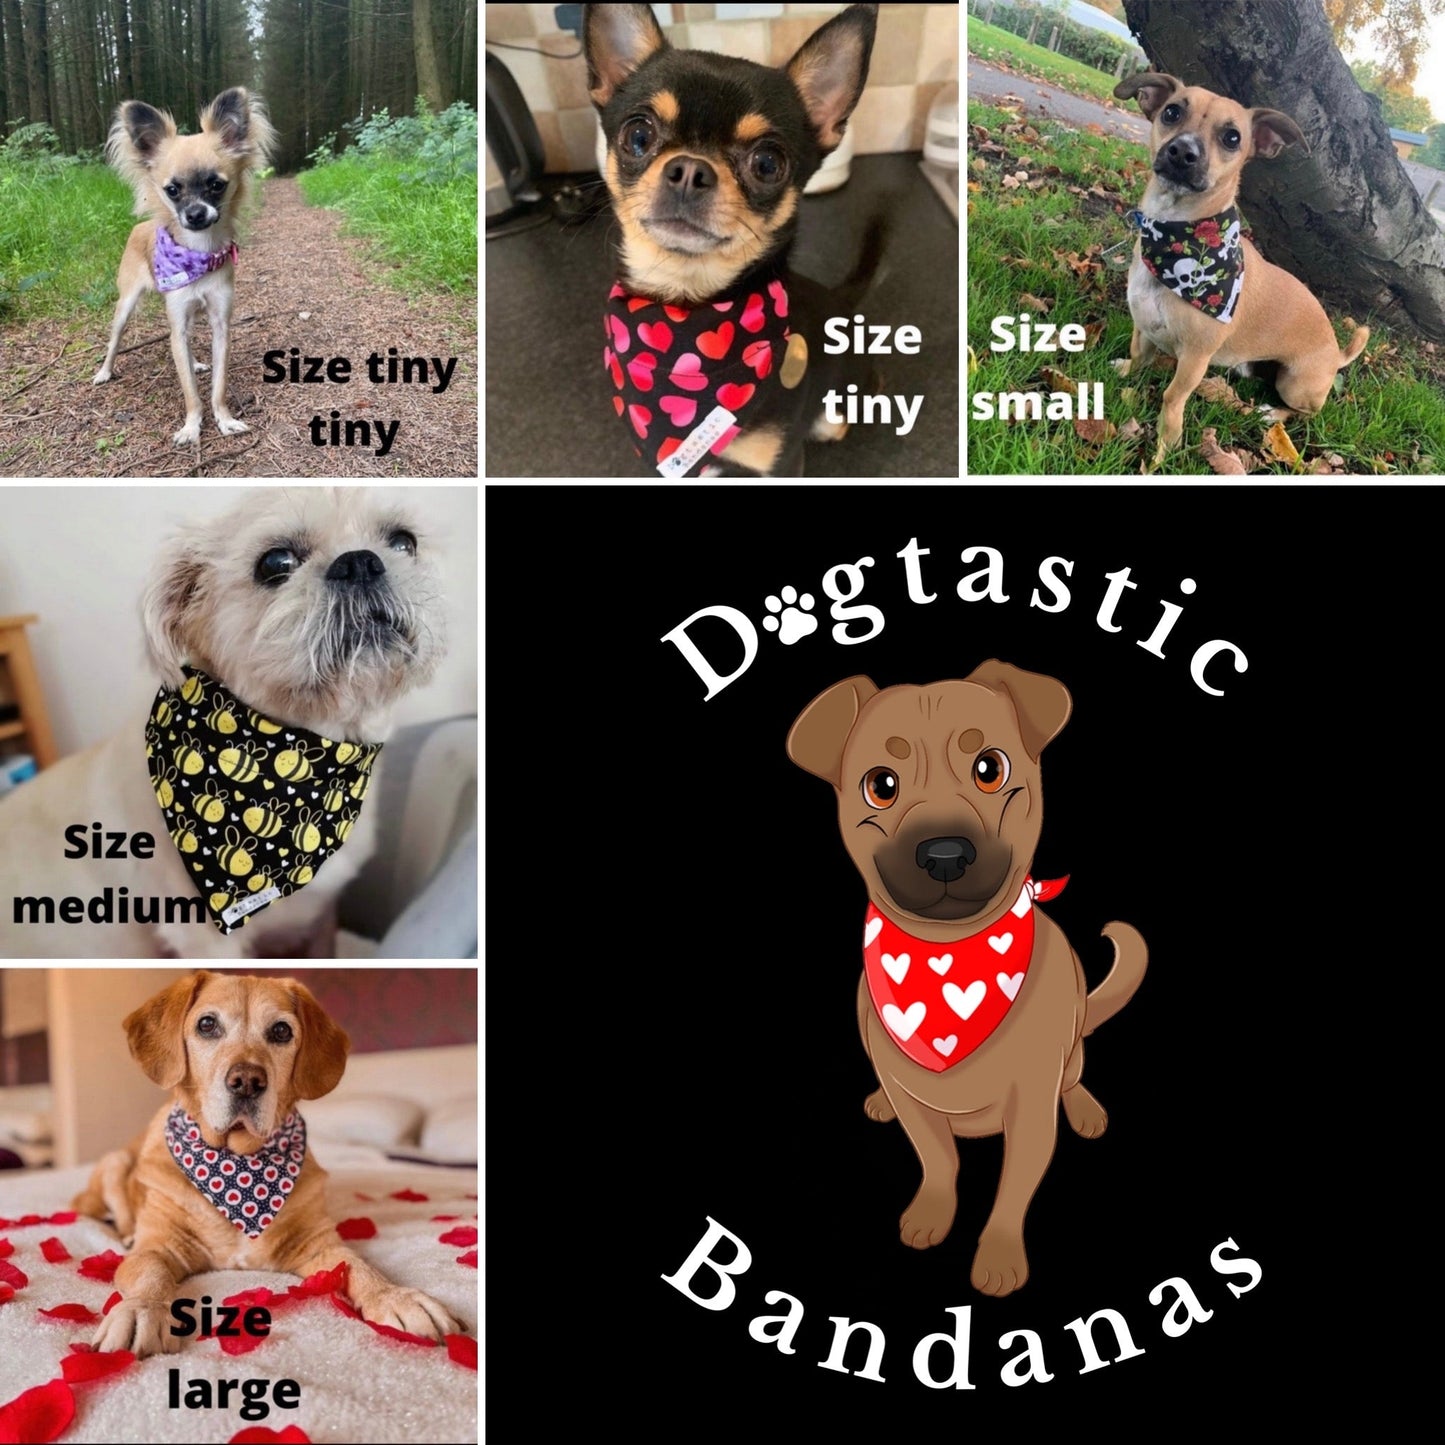 Hazard/caution dog/pet bandana